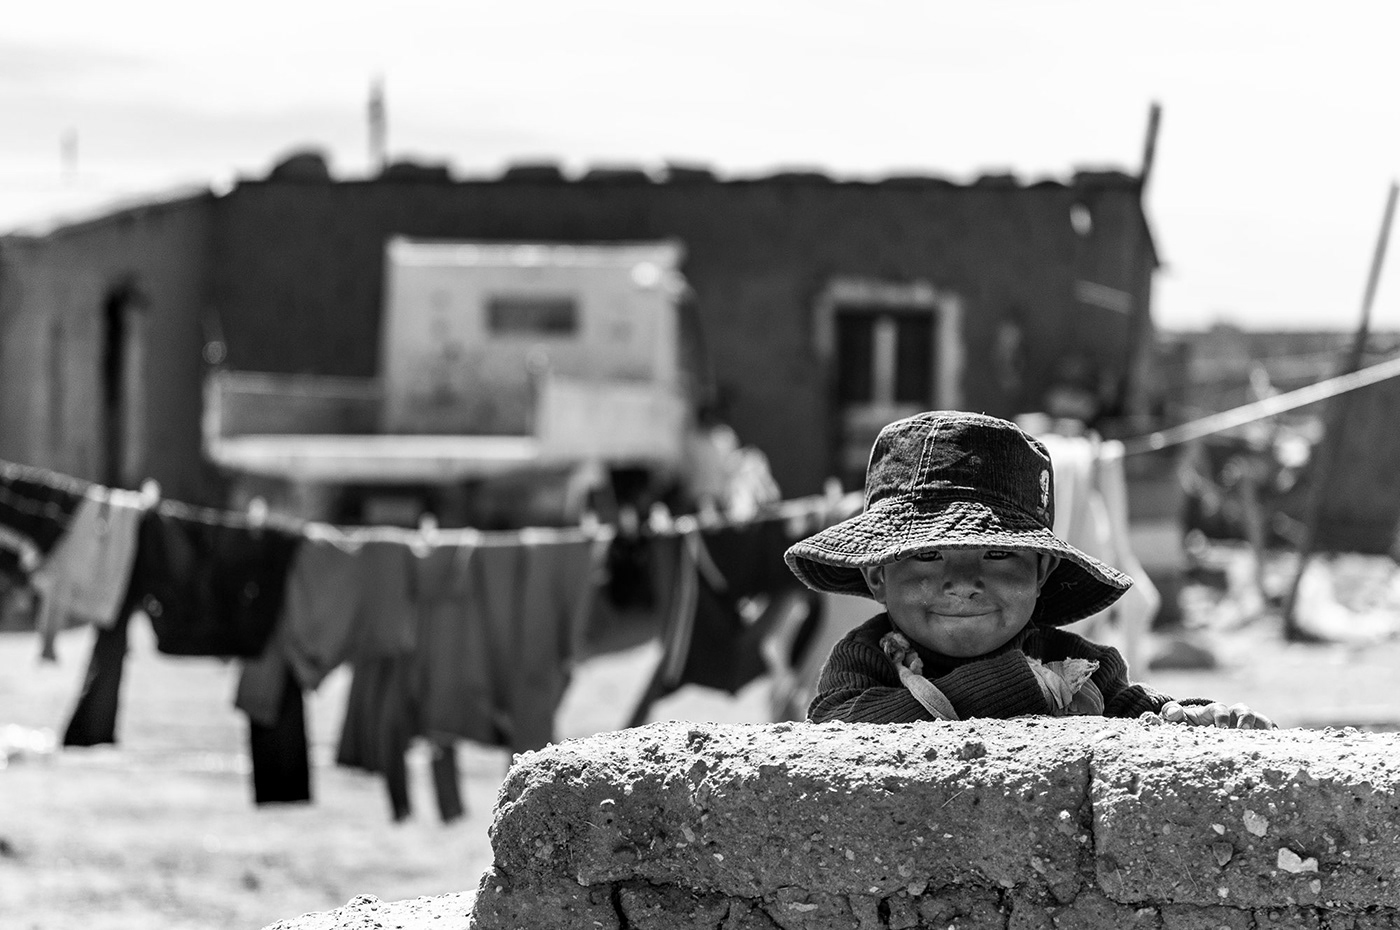 Black and white portrait of smiling child in Bolivia taken by travel photographer Jennifer Esseiva.